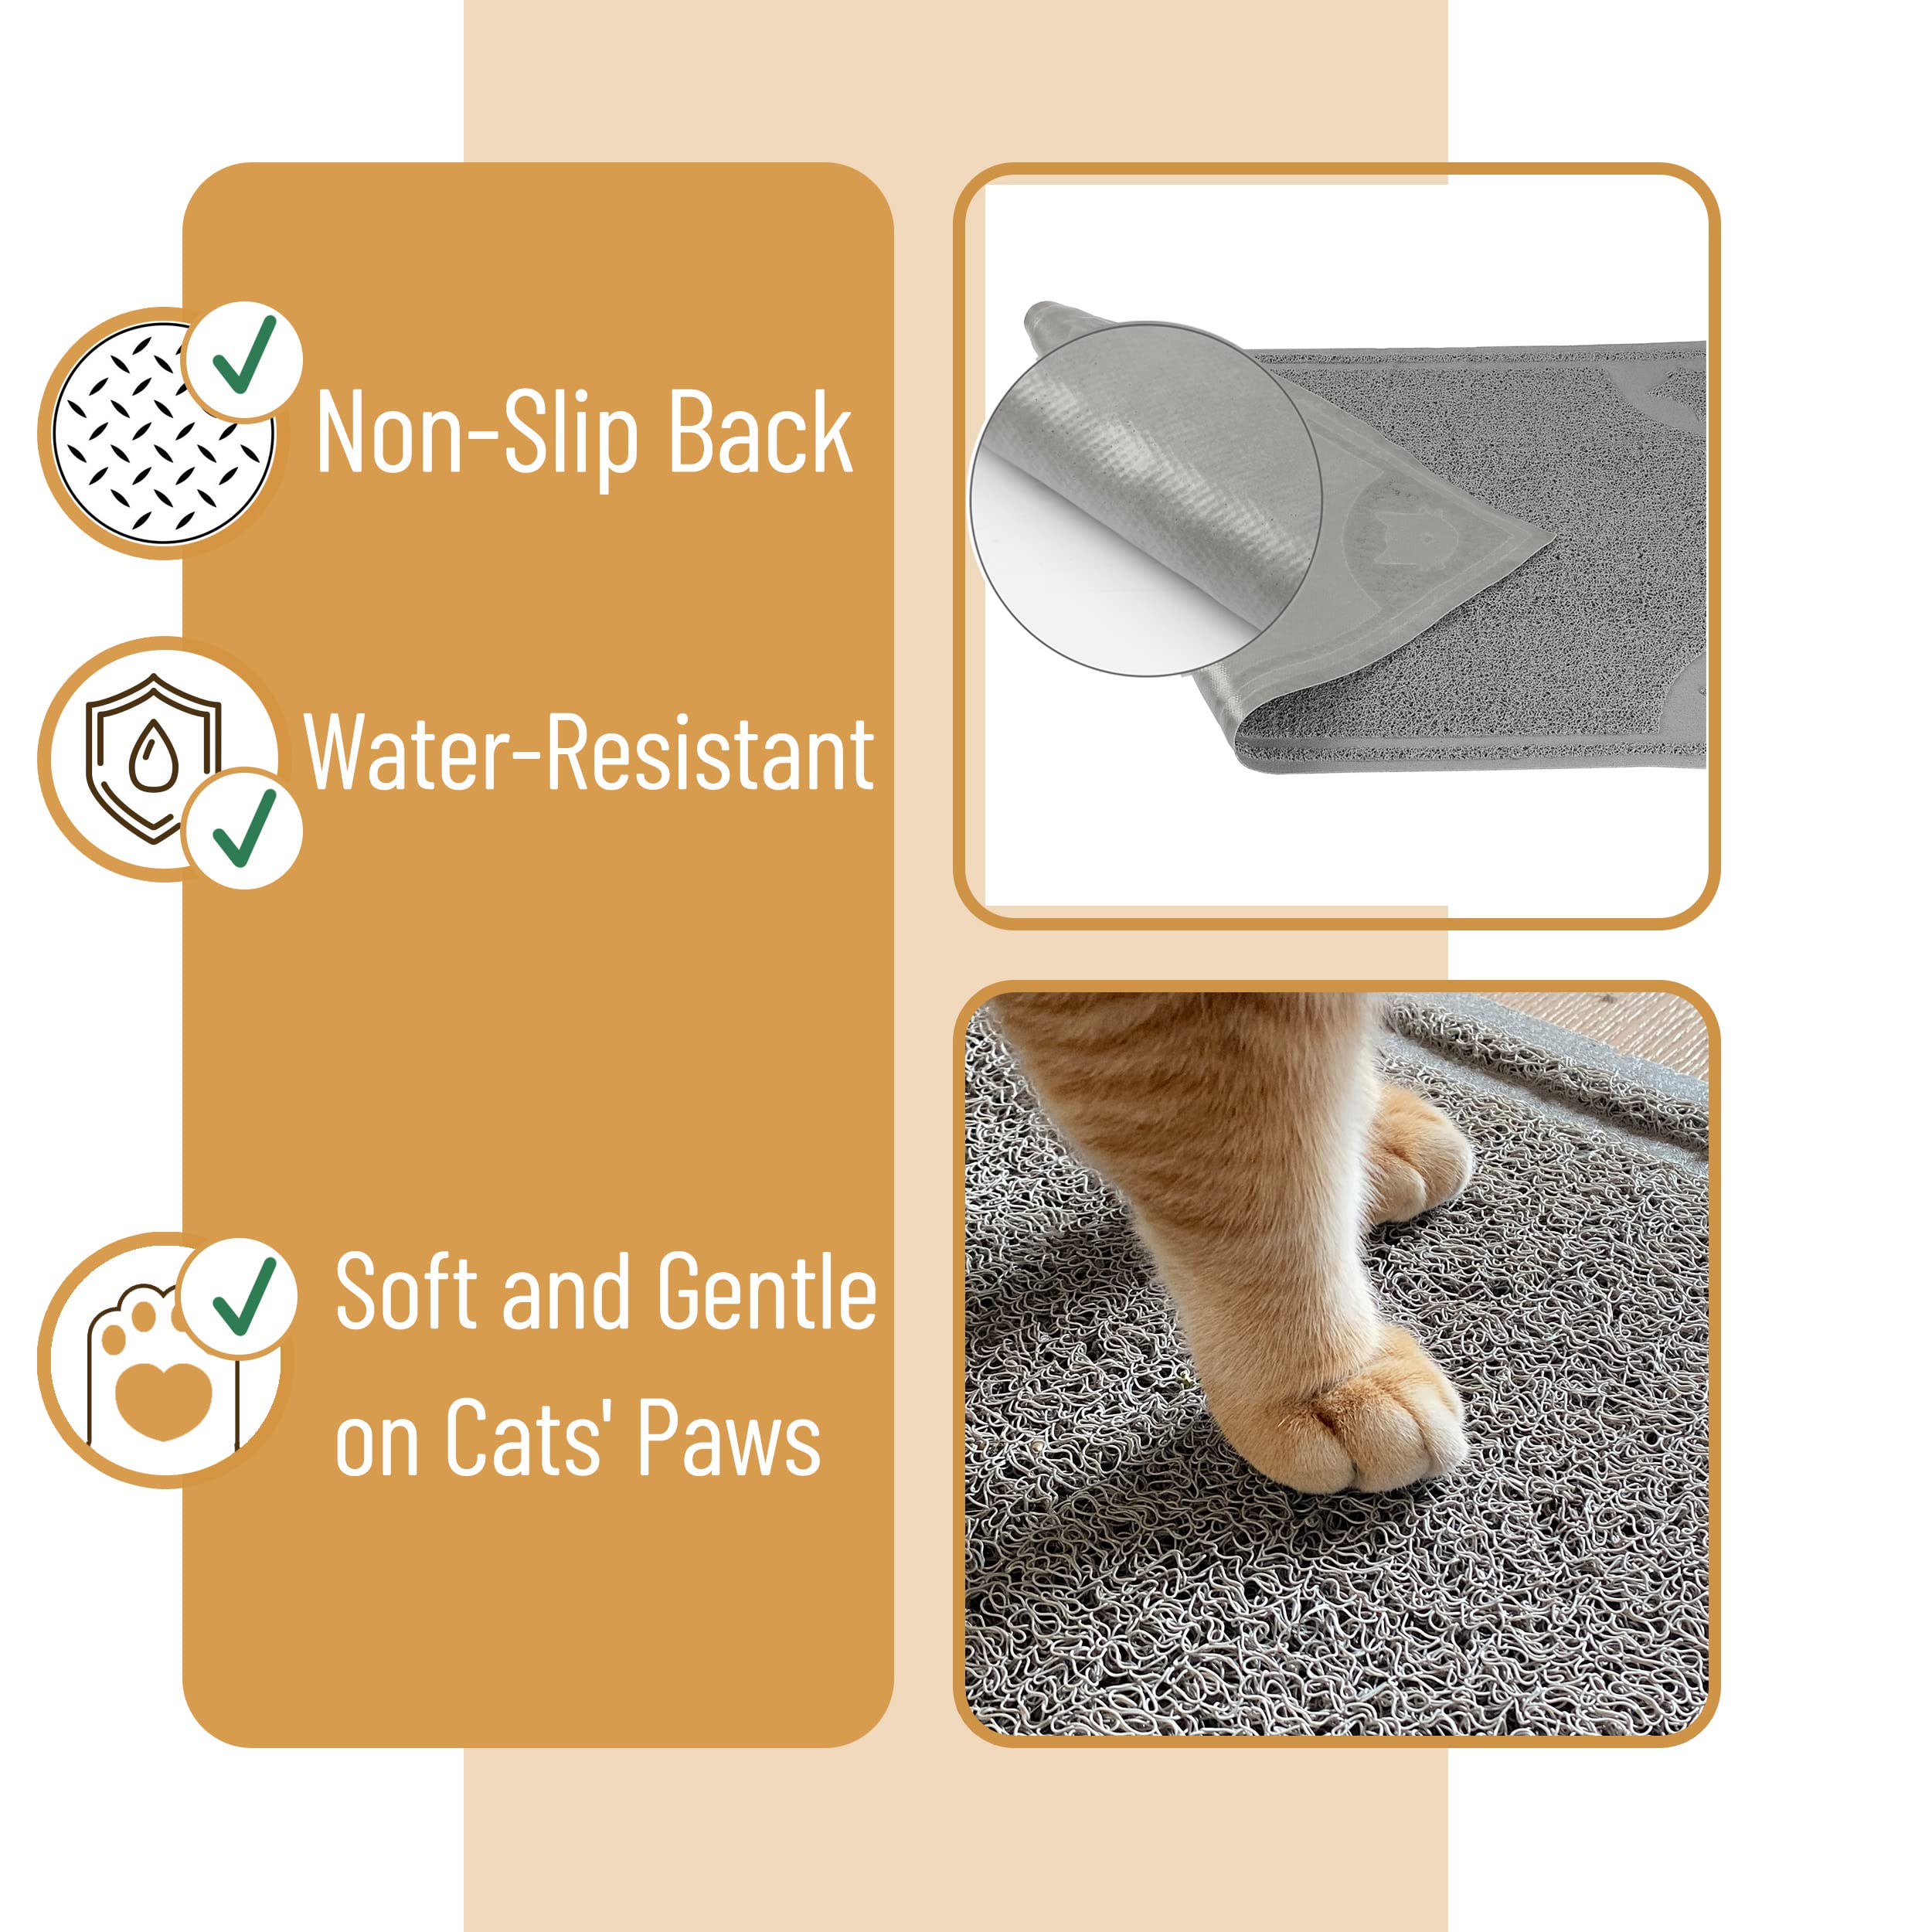 Mr. Pen- Large Cat Litter Mat, 23.5”X 35.2”, Gray, Trapping Mat for Litter Box, Cat Rug, Large